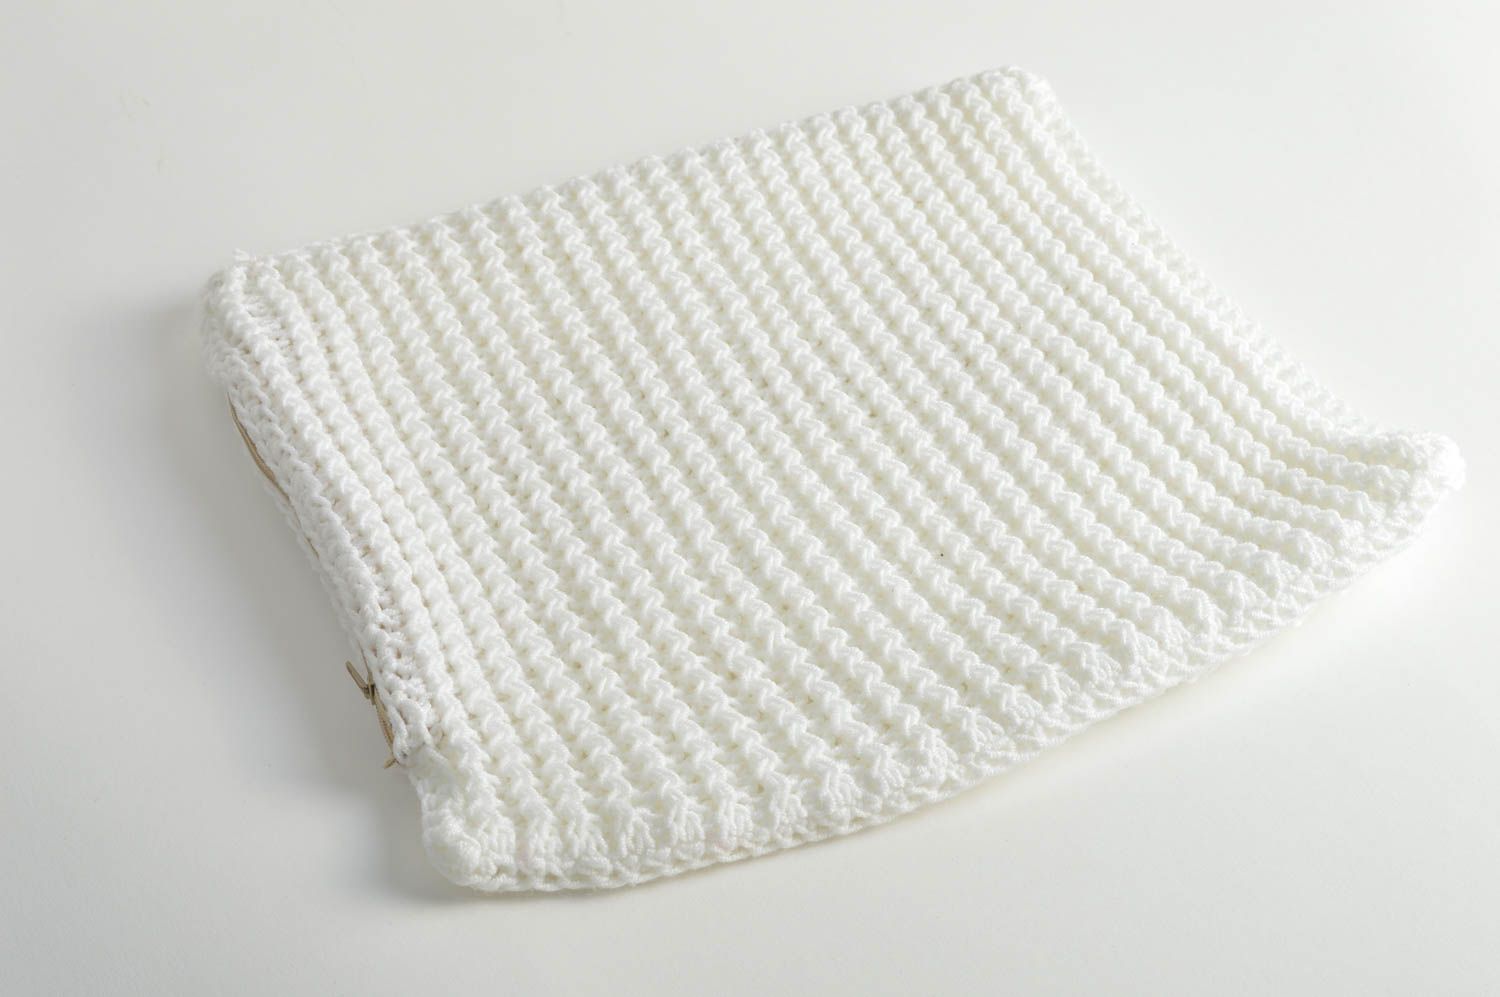 Small stylish beautiful handmade white knitted pillowcase designer accessory photo 3